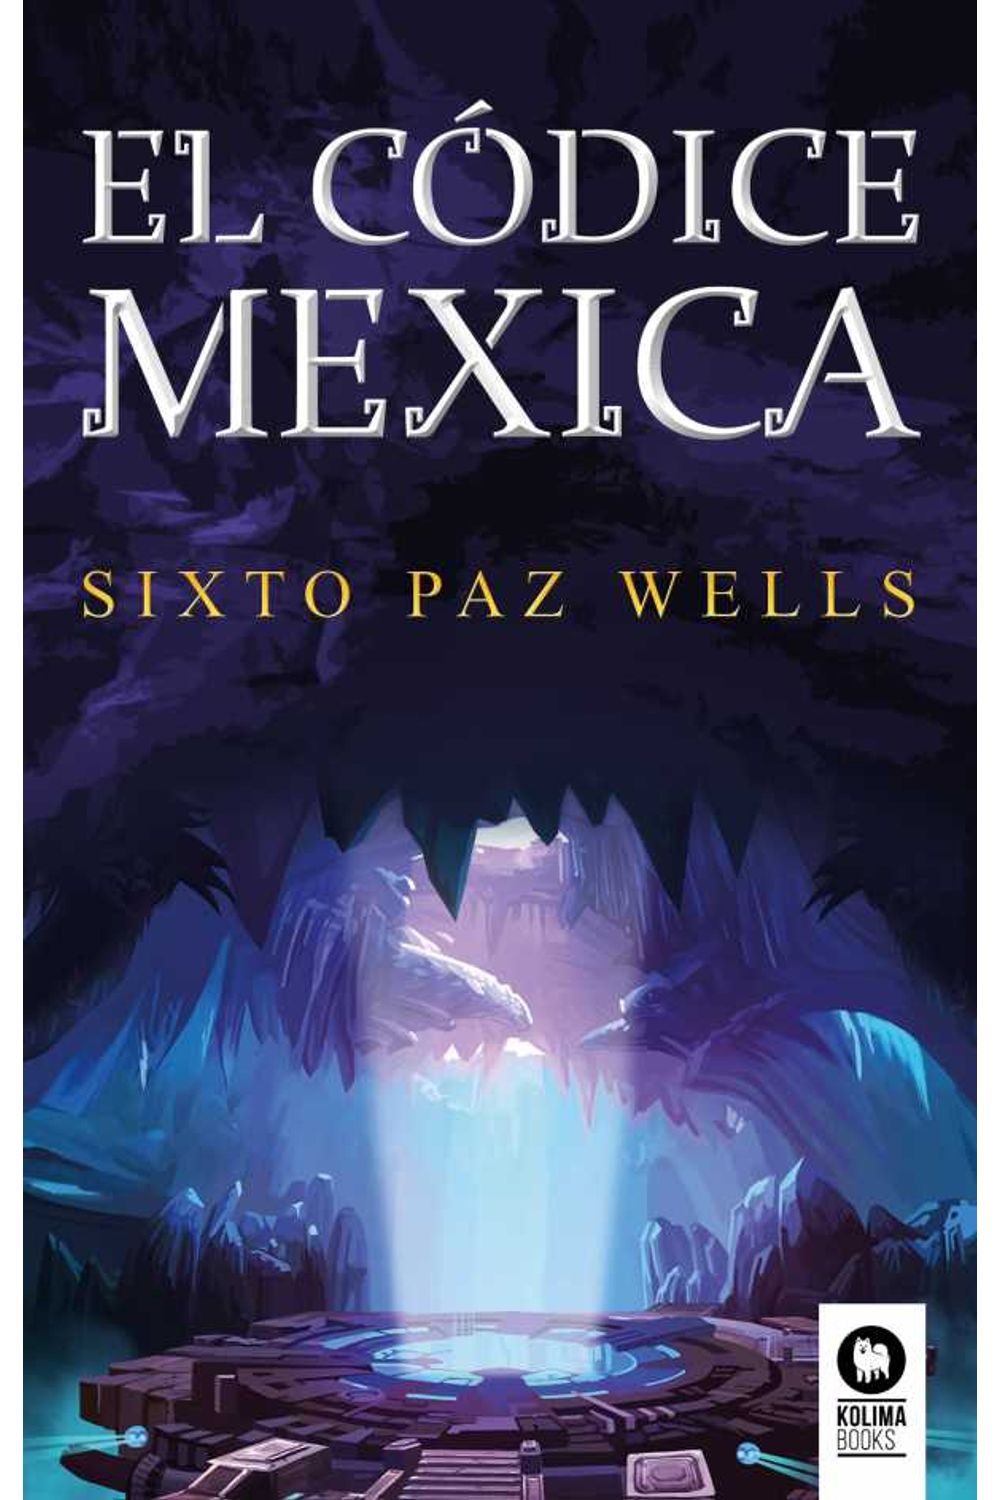 bw-el-coacutedice-mexica-kolima-books-9788416994946